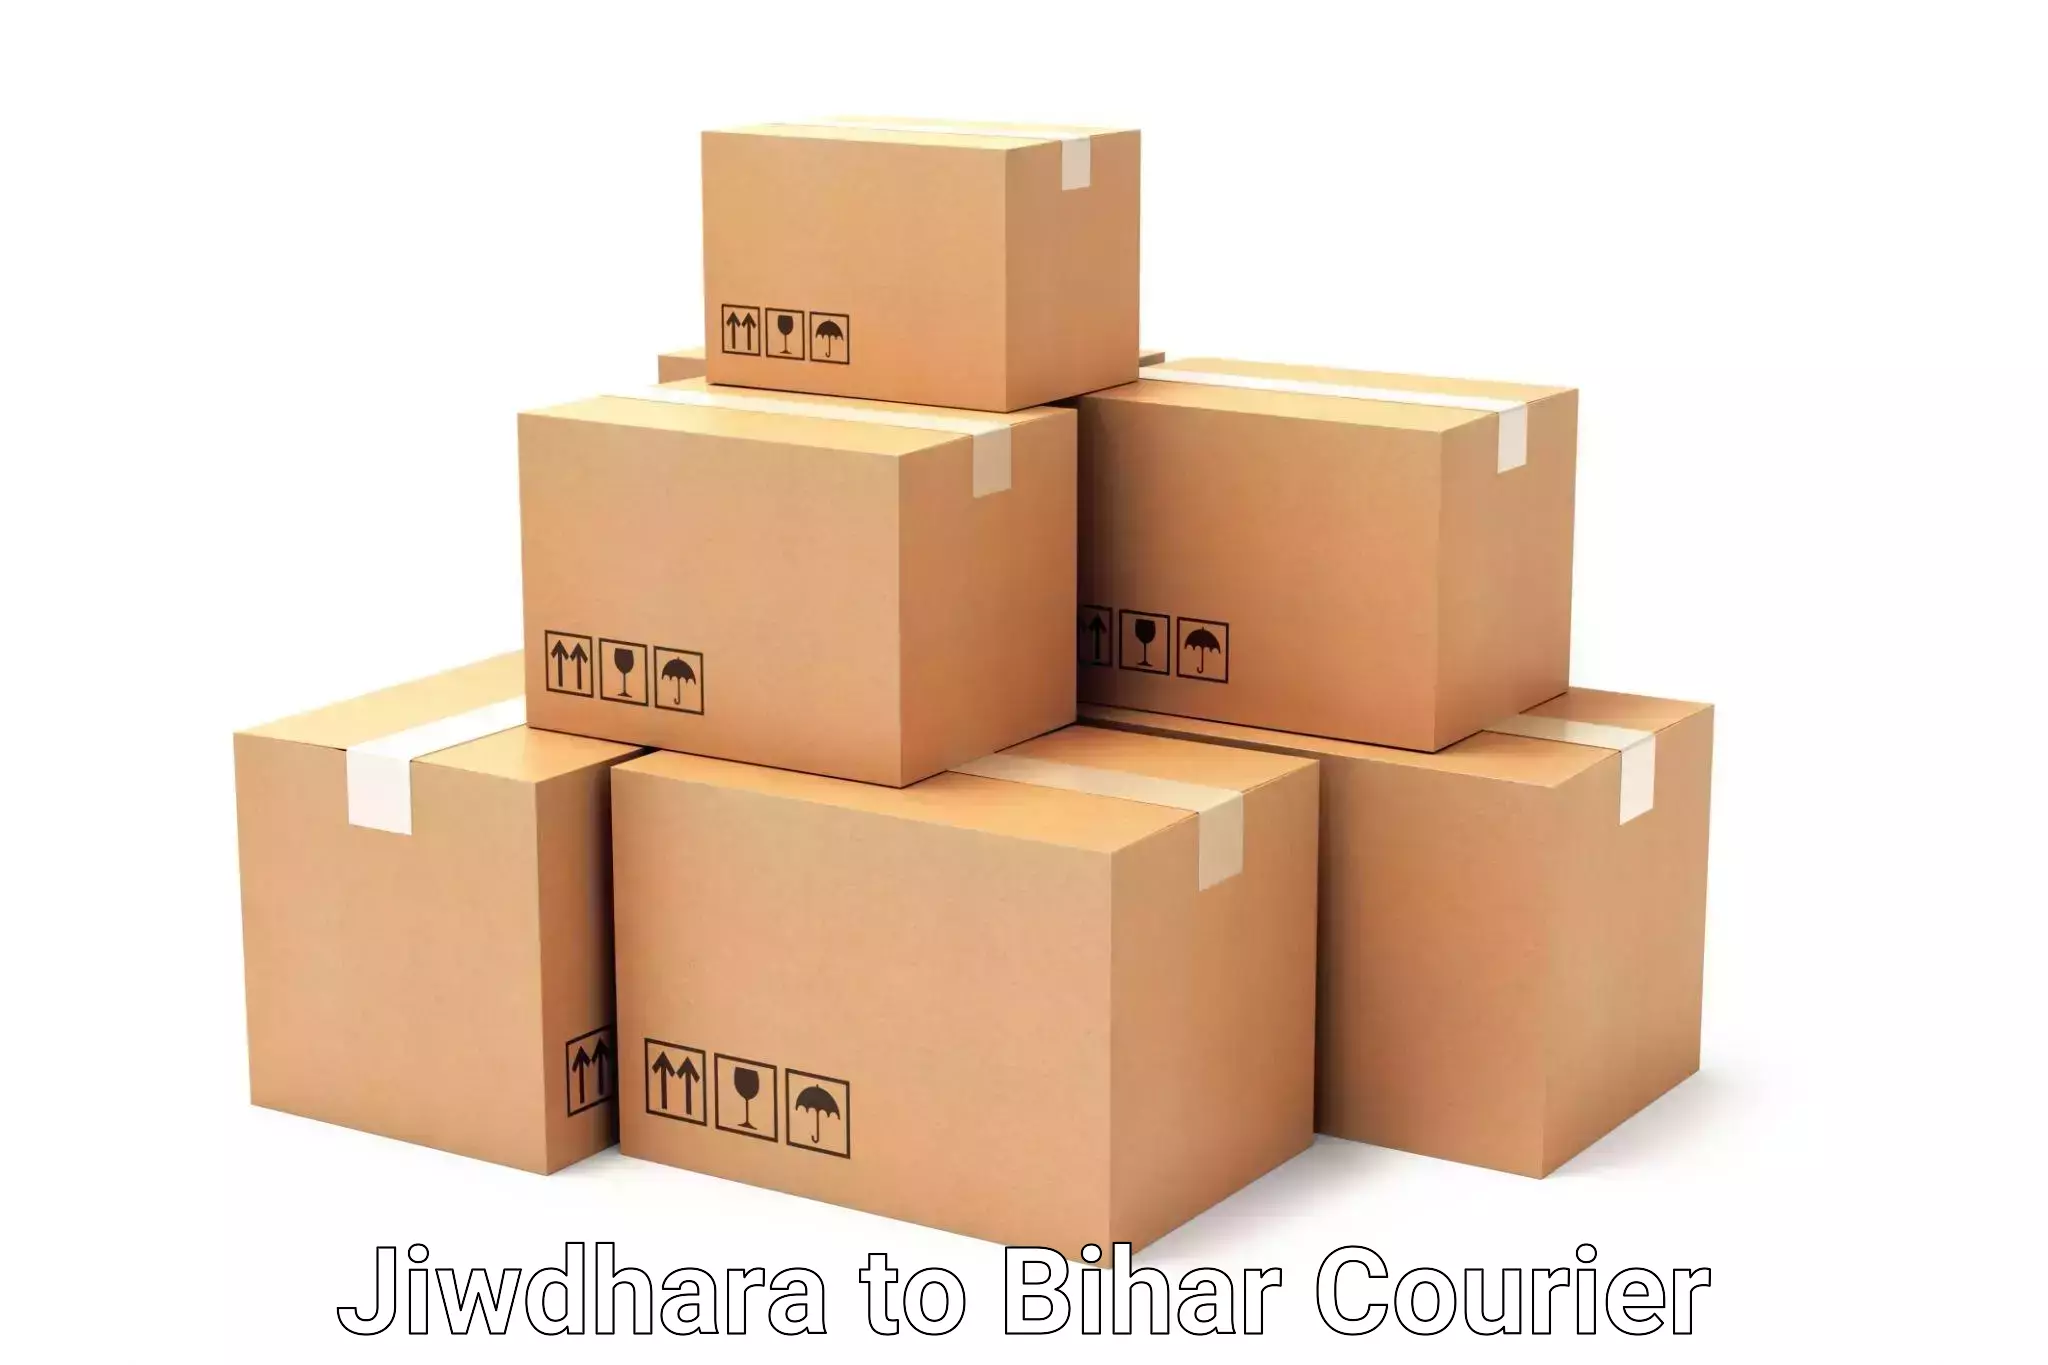 Comprehensive baggage service in Jiwdhara to Mojharia